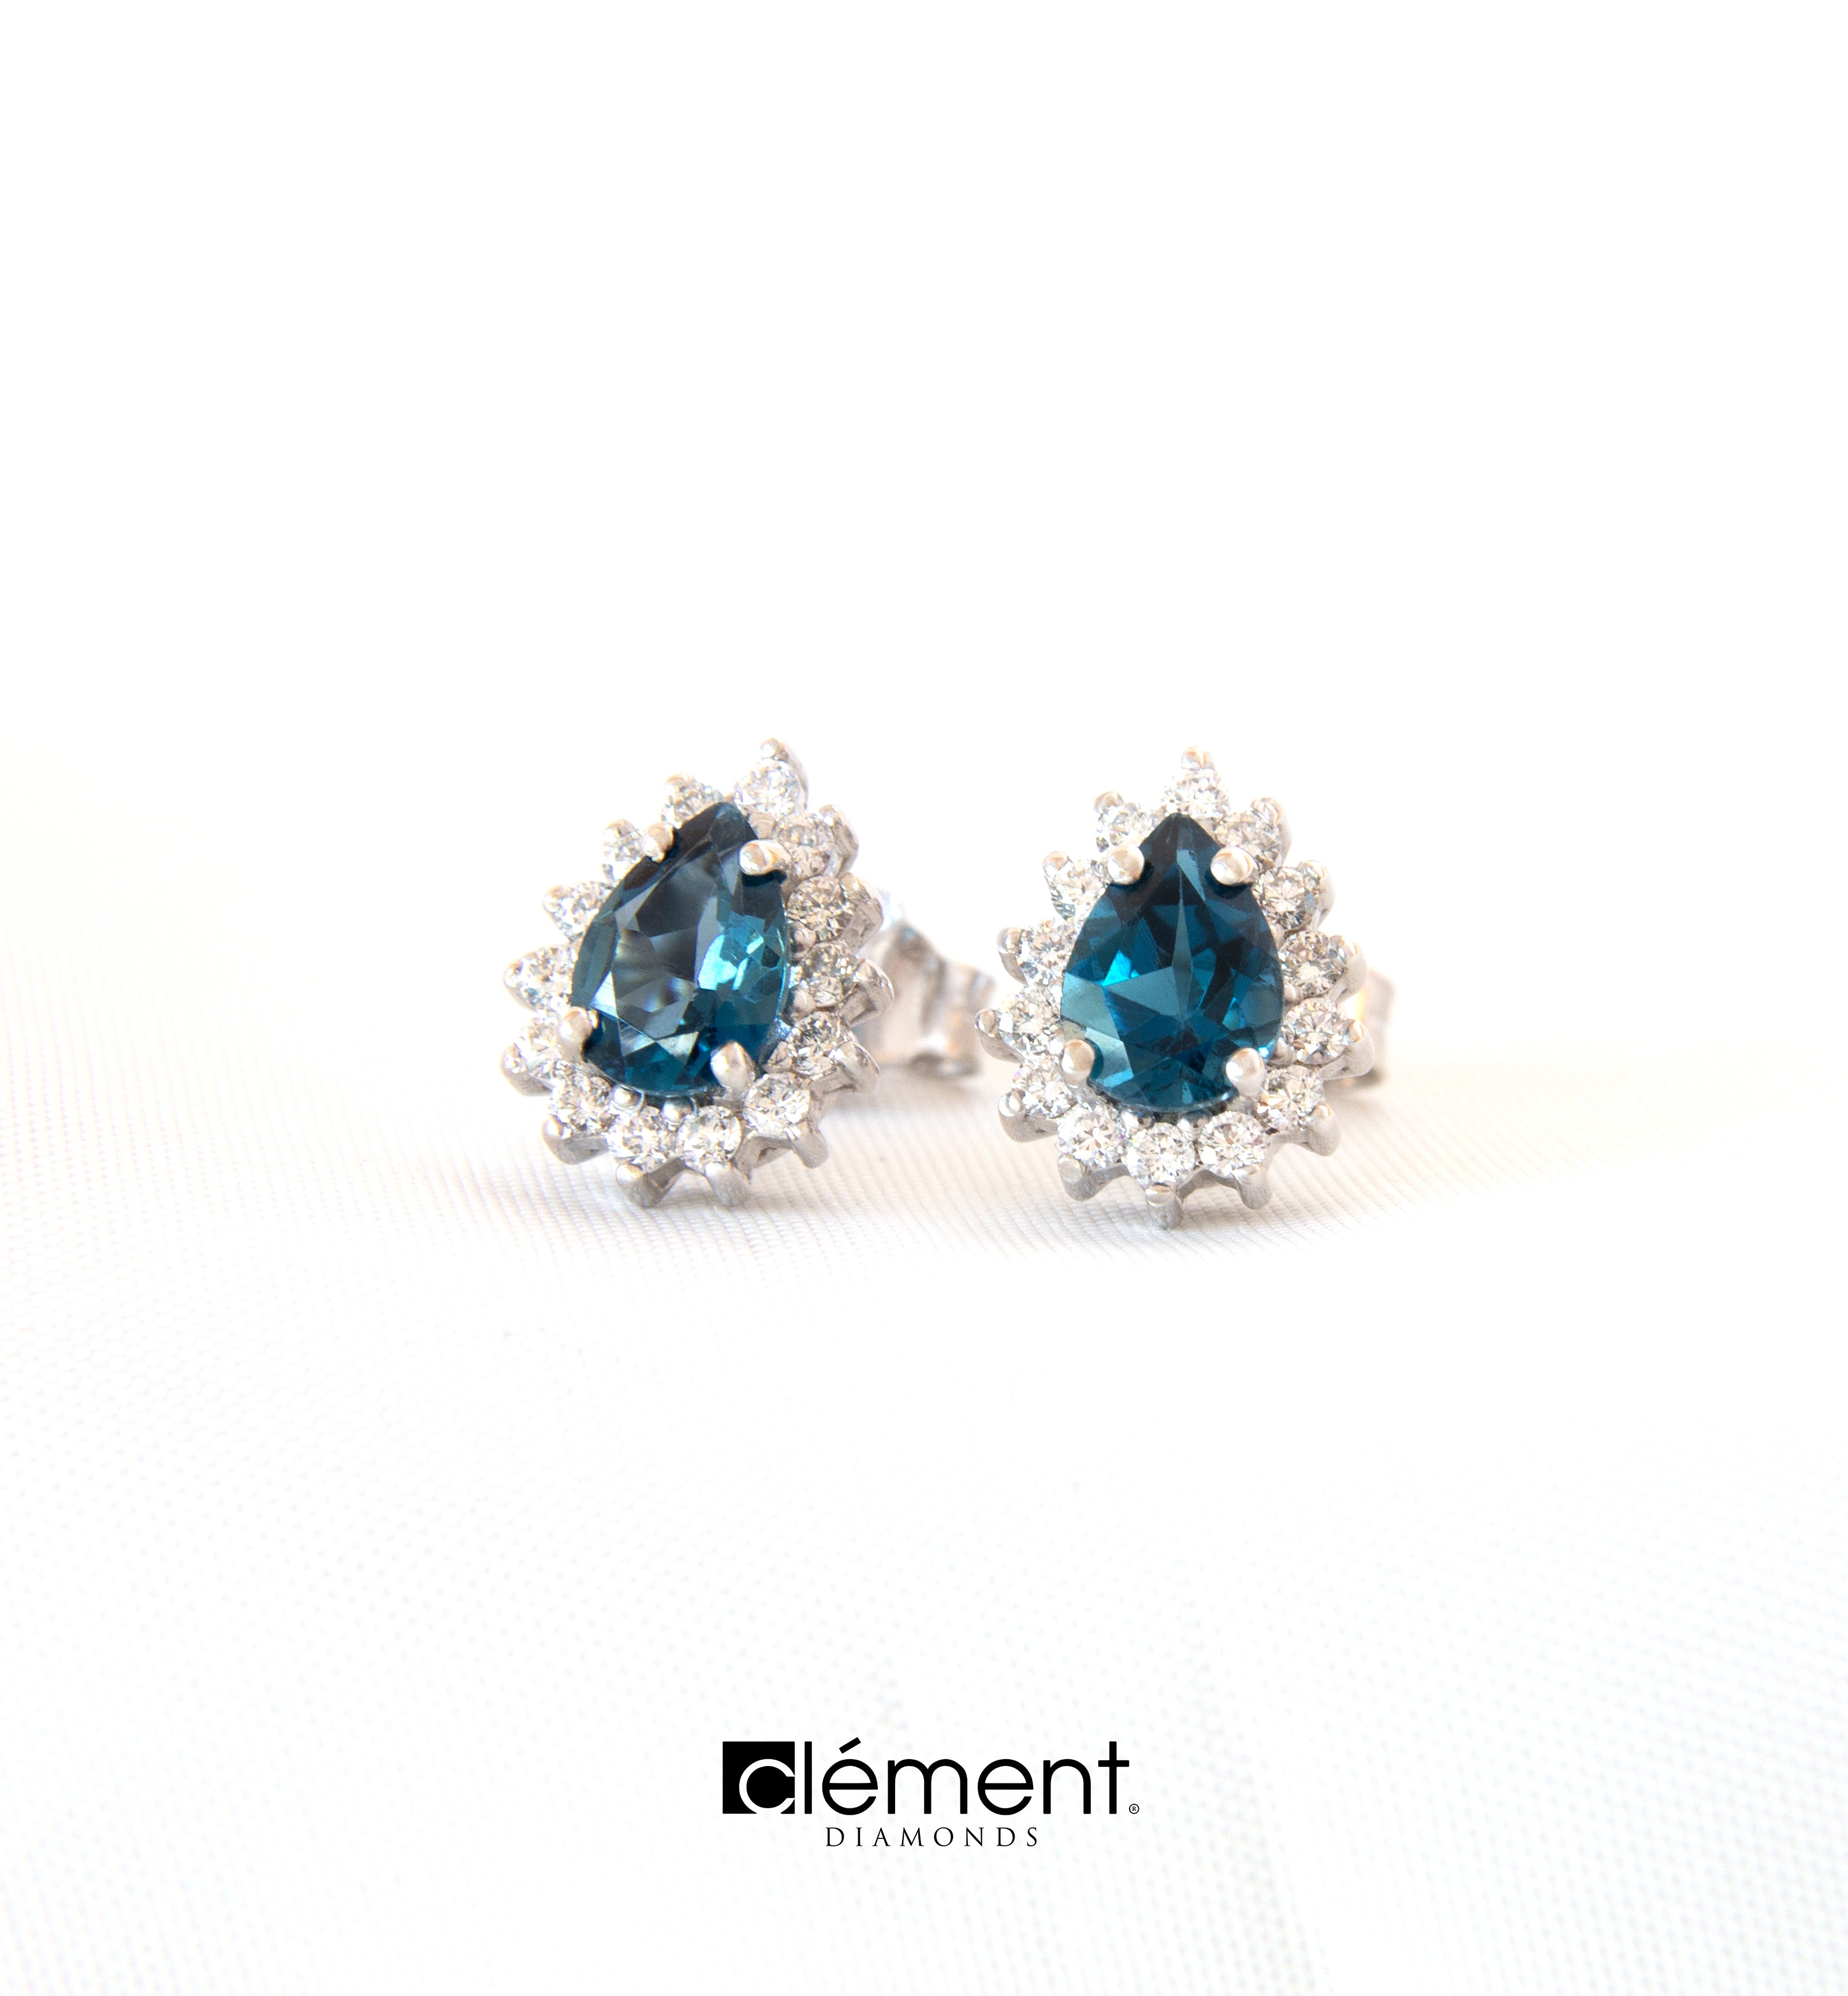 18ct White Gold Diamond and London Blue Topaz Earrings